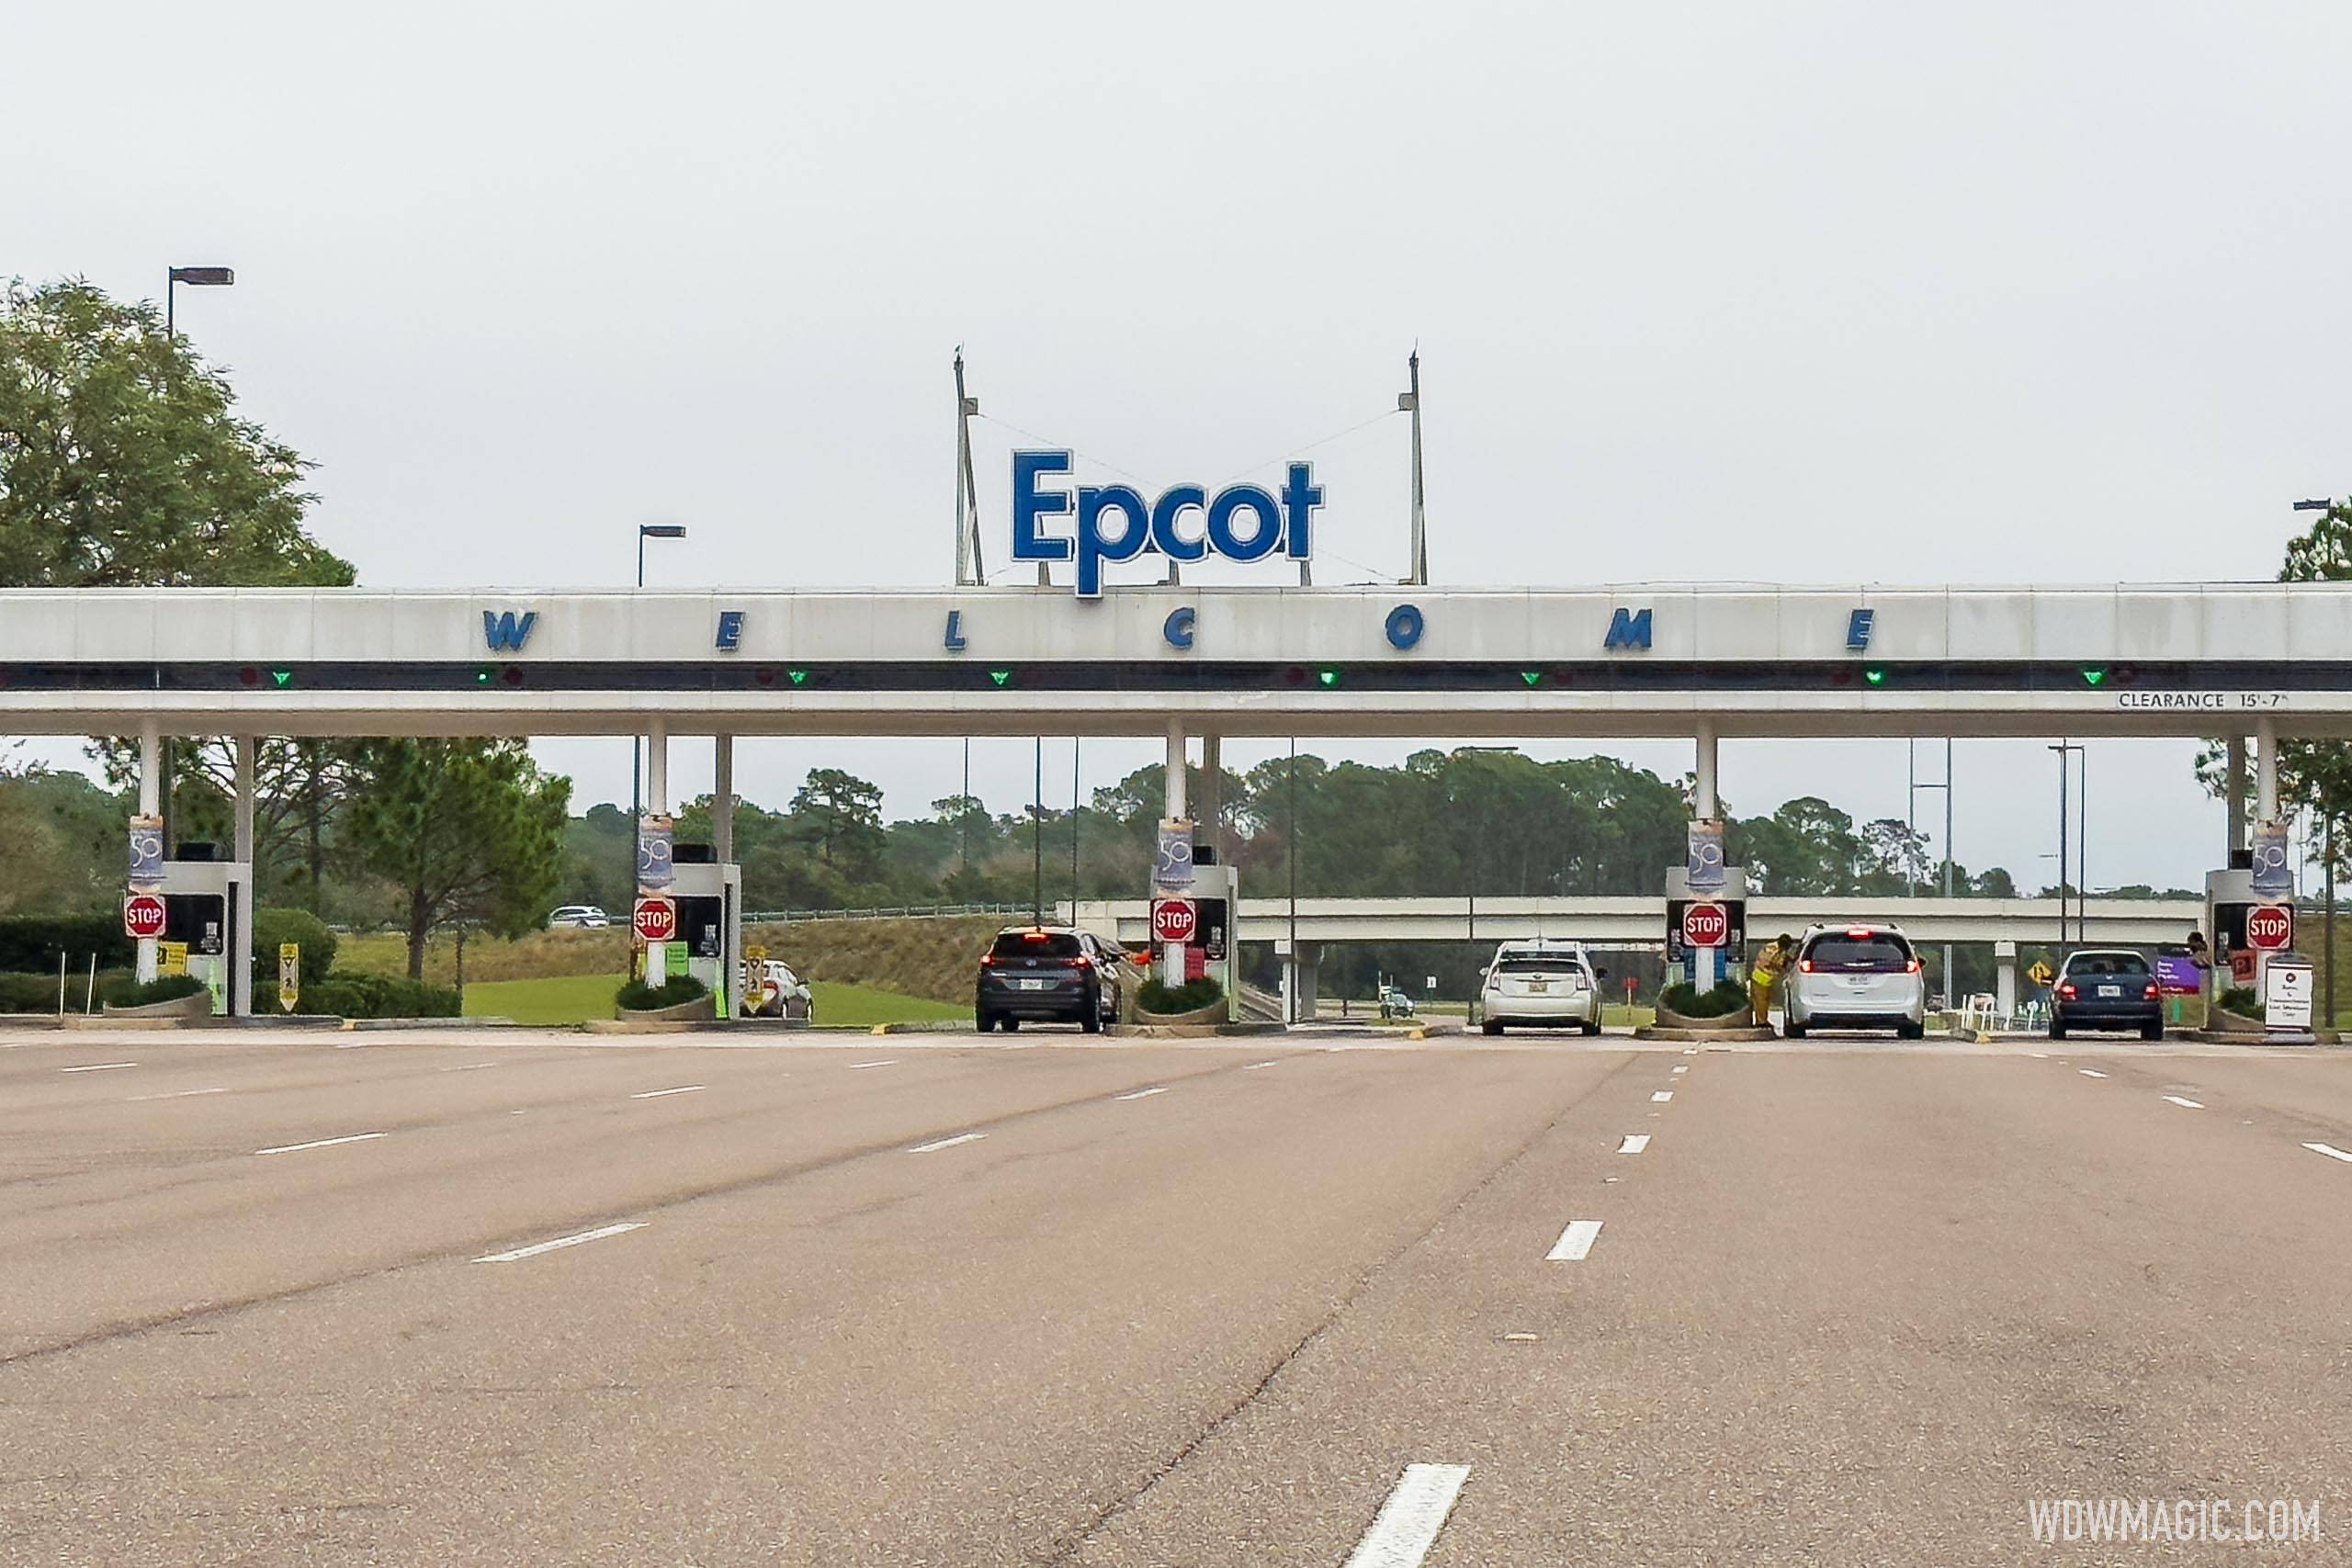 The previous EPCOT auto plaza signage